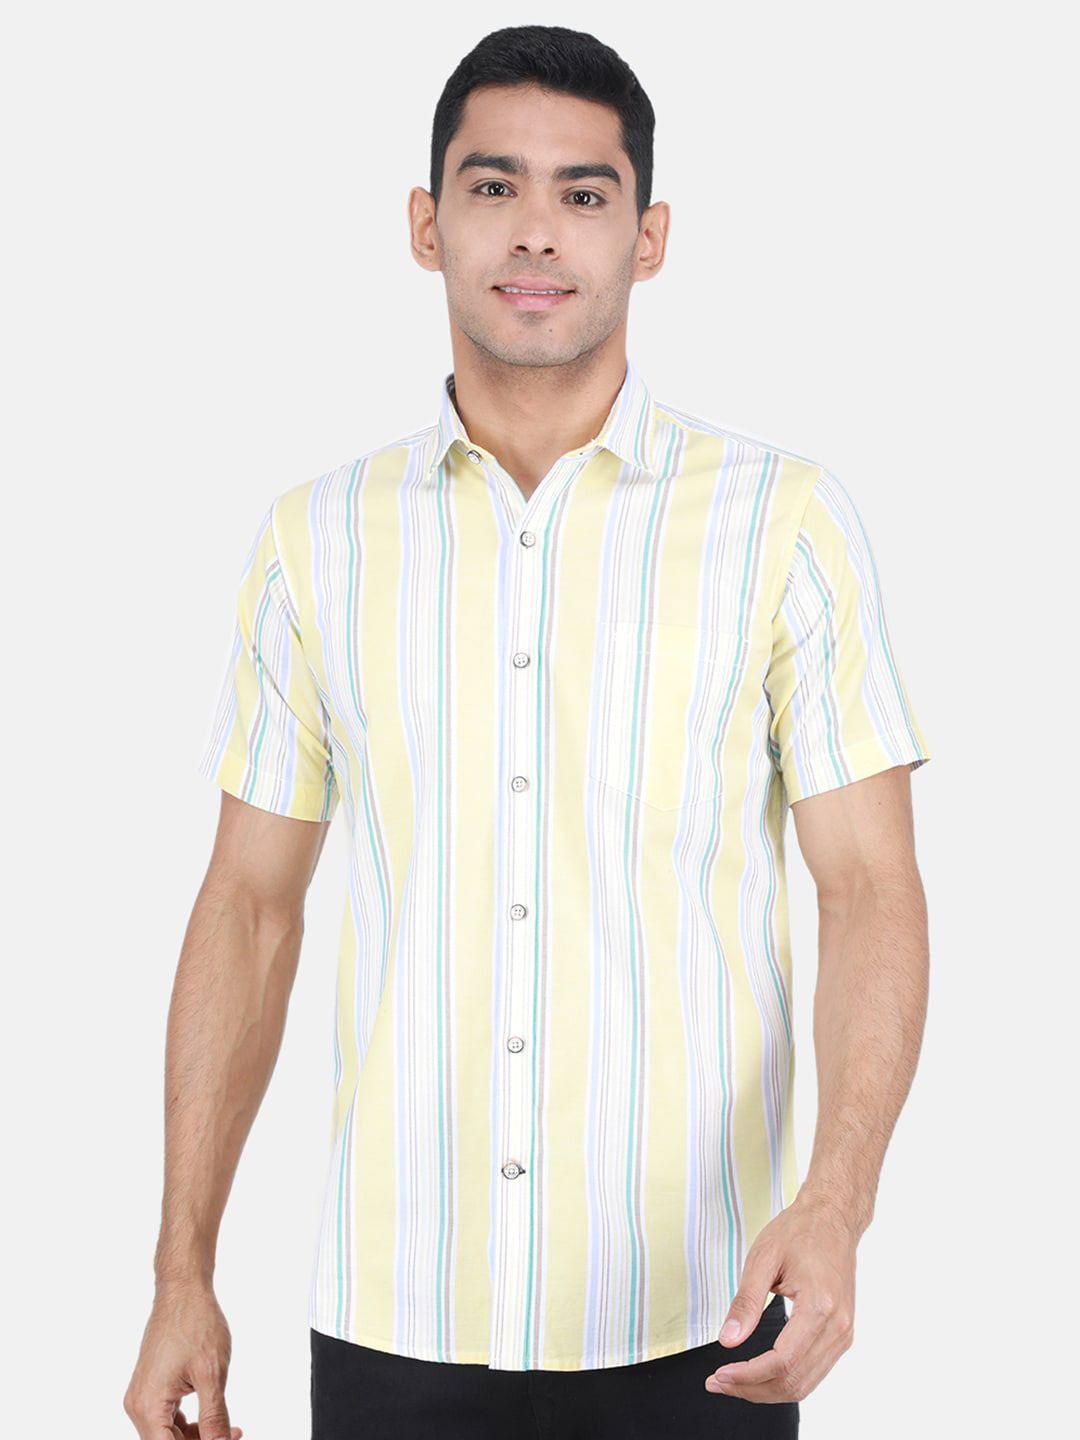 monte carlo striped cotton casual shirt